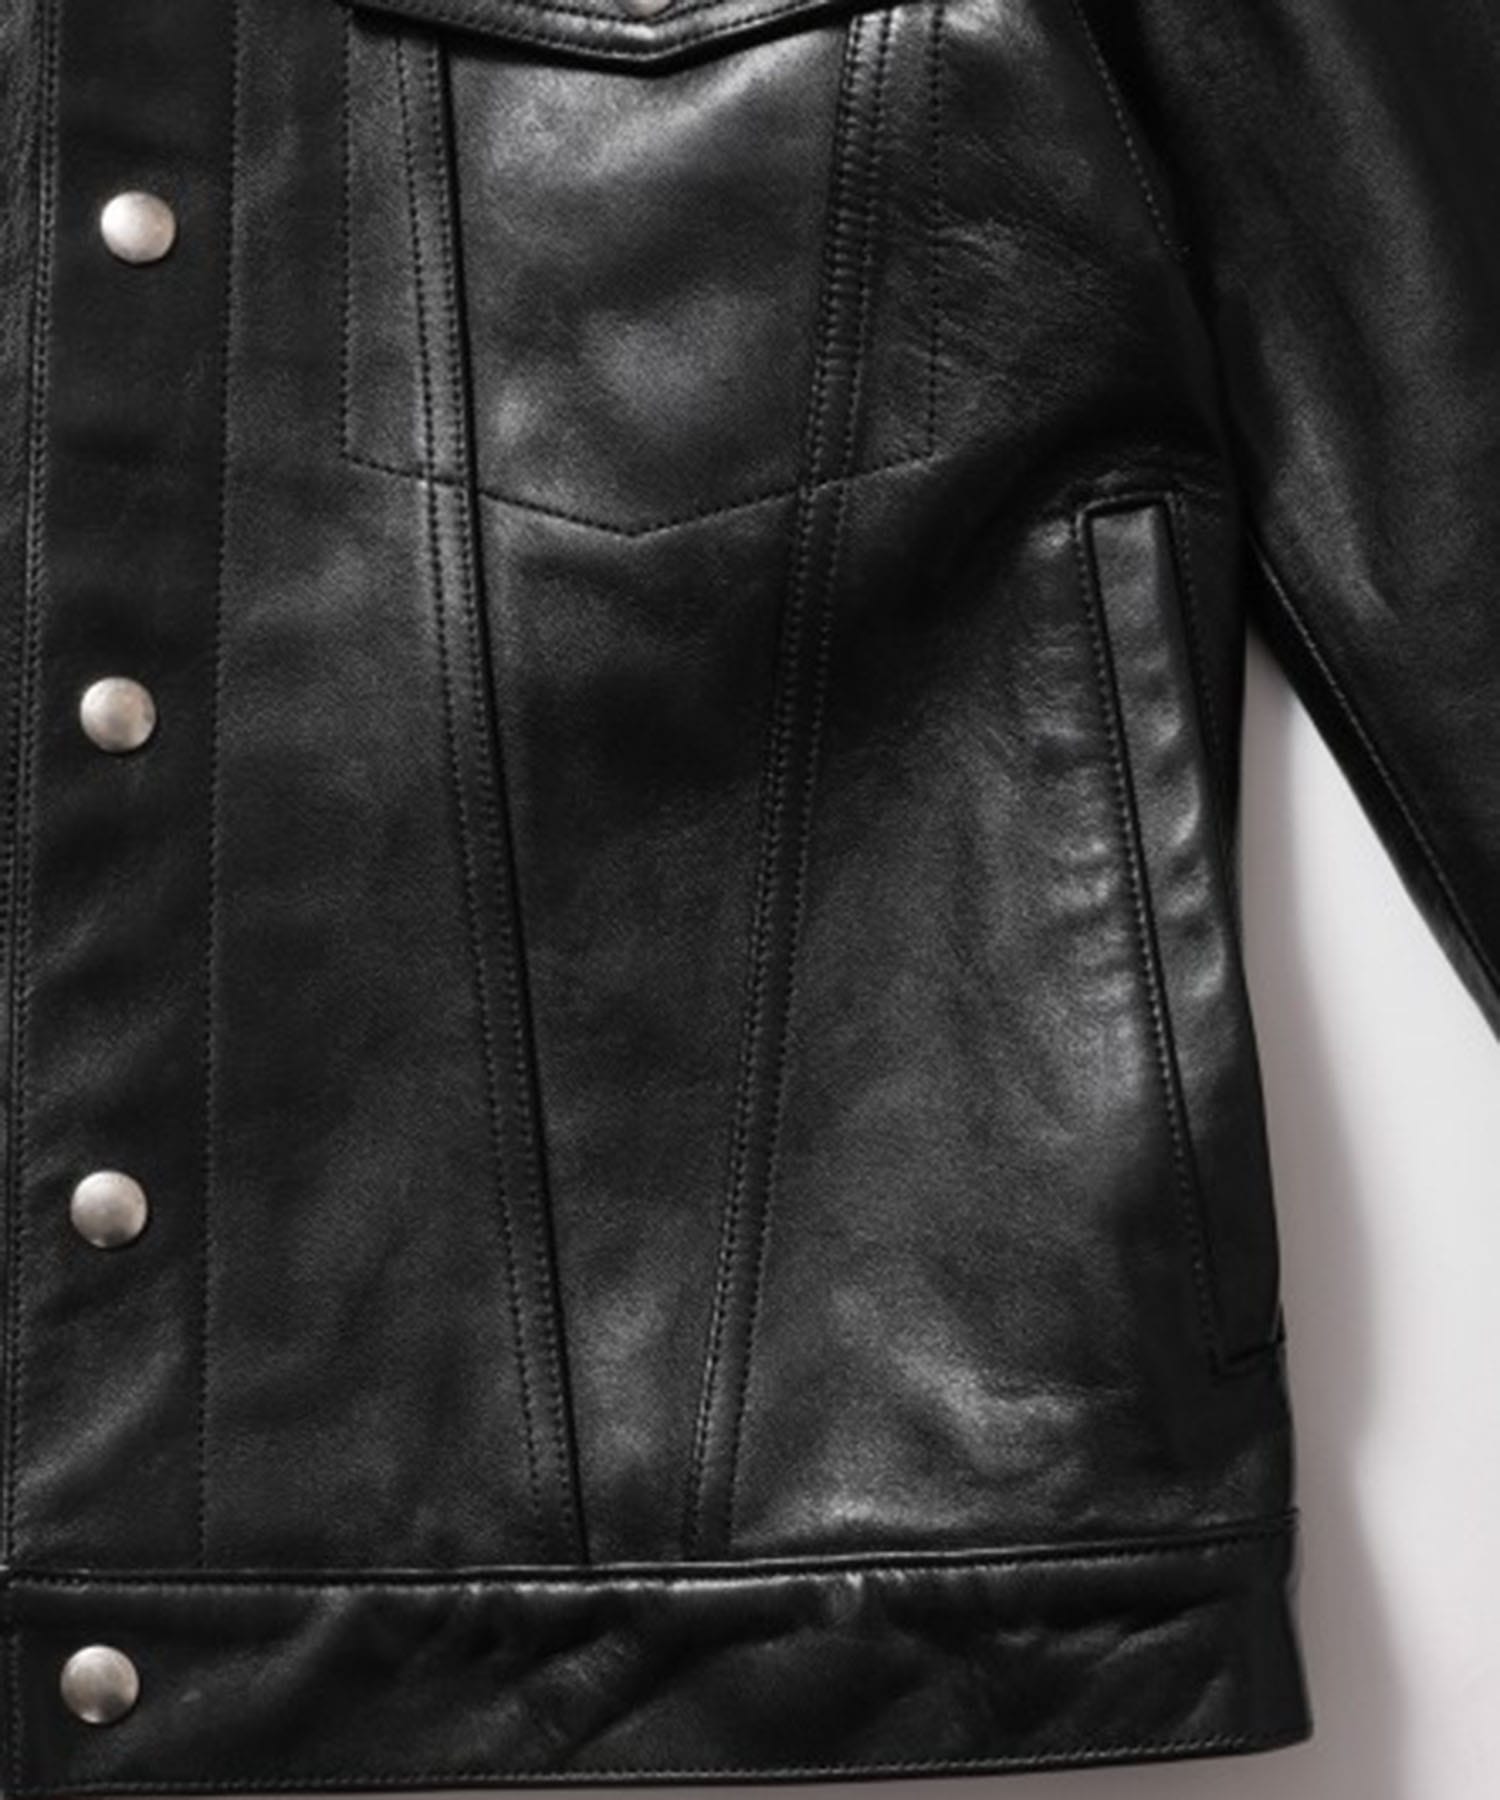 vintage leather jean jacket 190 レザージャケット